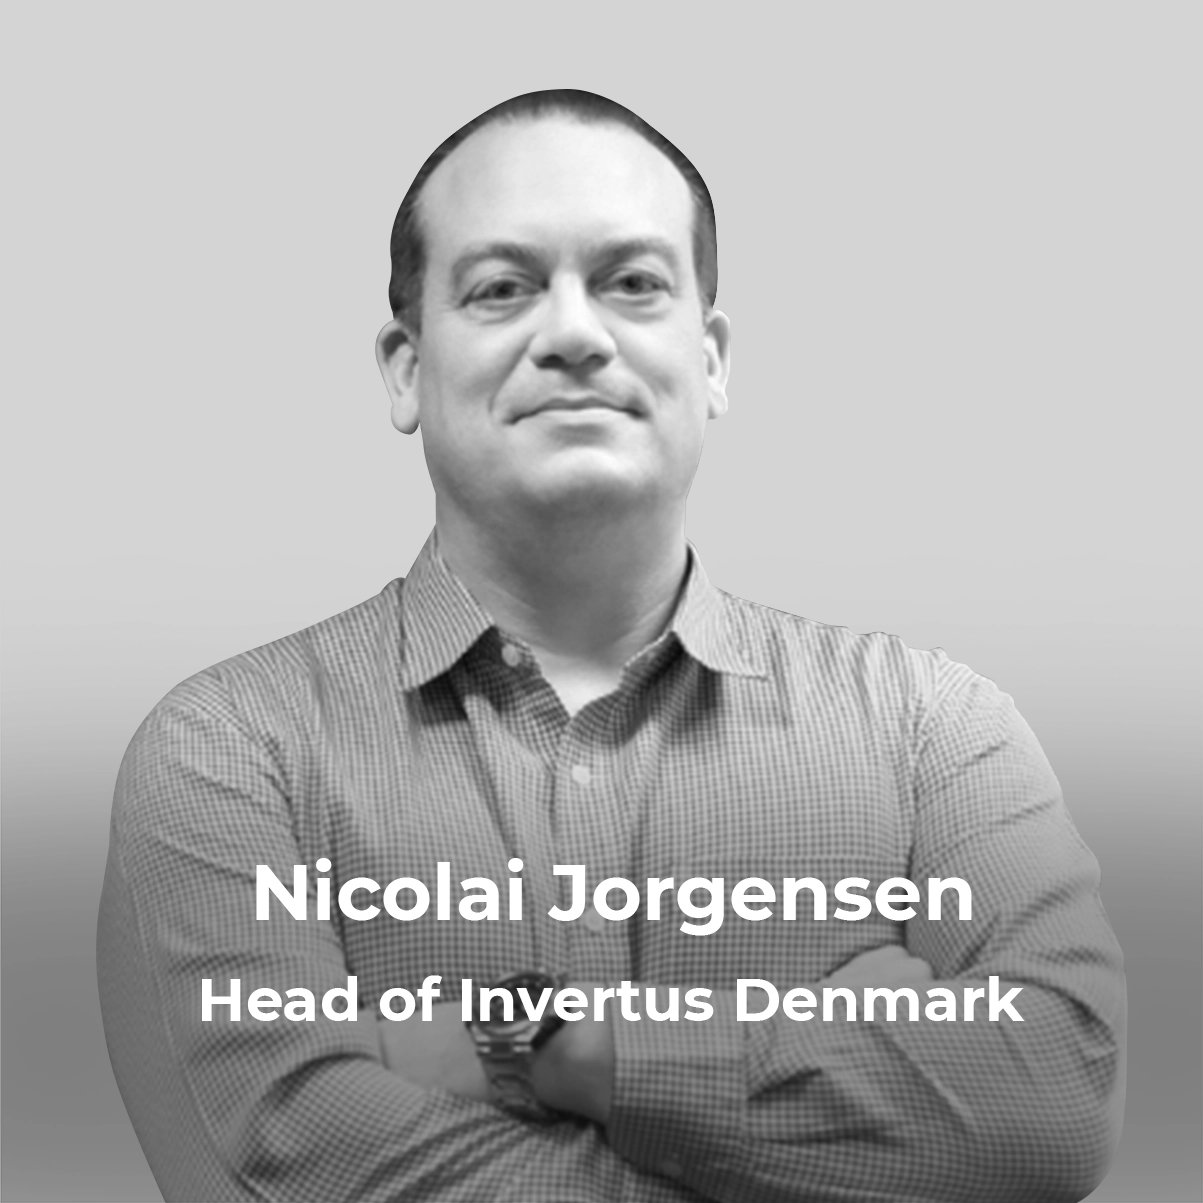 Nicolai Jorgensen Invertus denmark